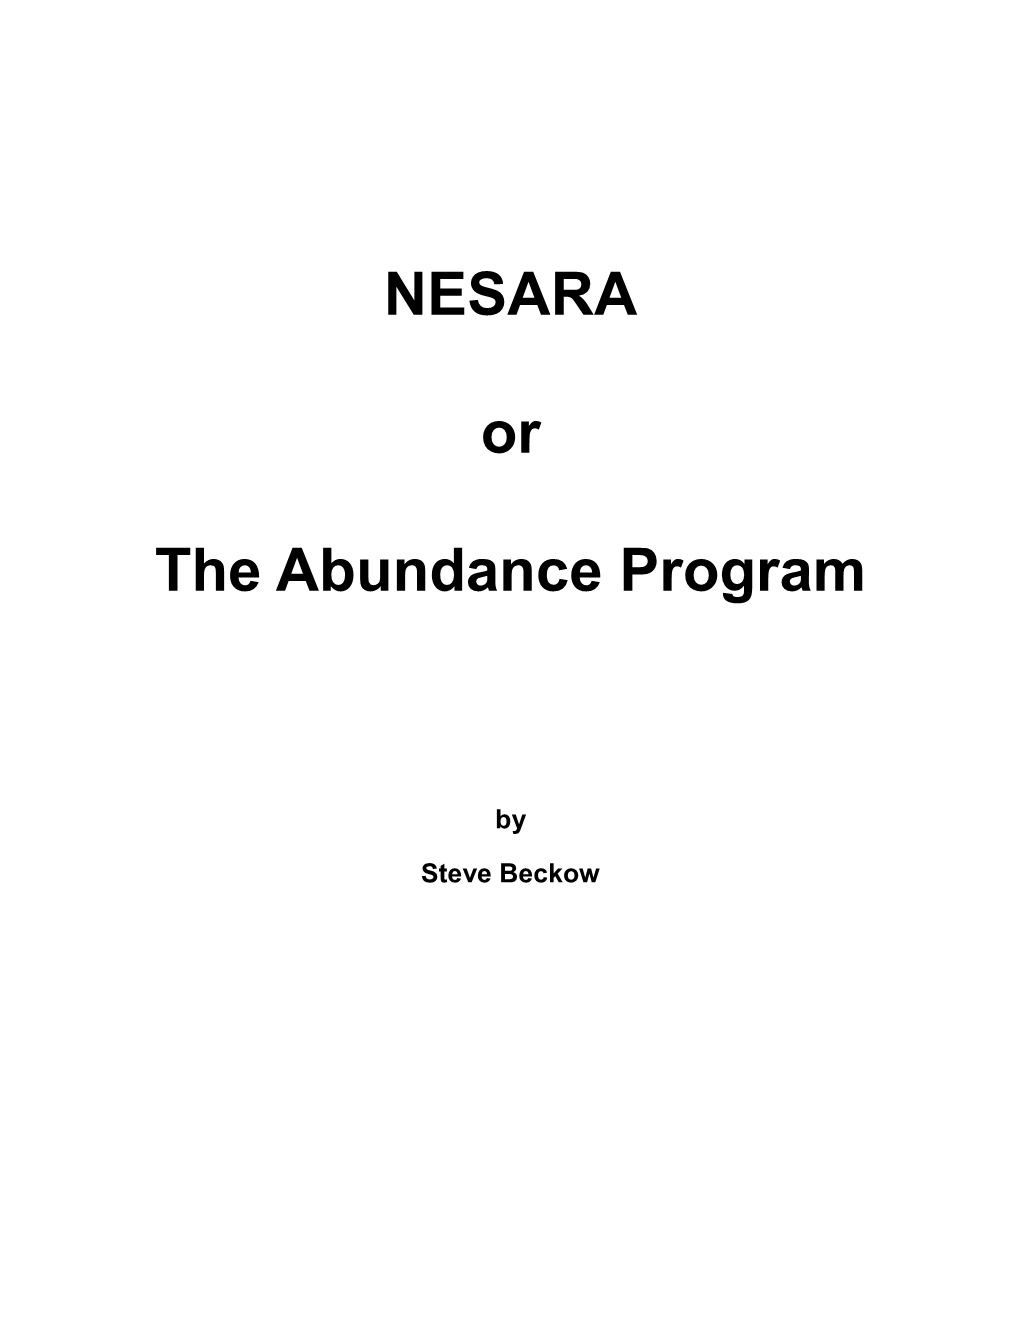 NESARA Or the Abundance Program Copyright Refused, 2012 by Steve Beckow Please Distribute Freely